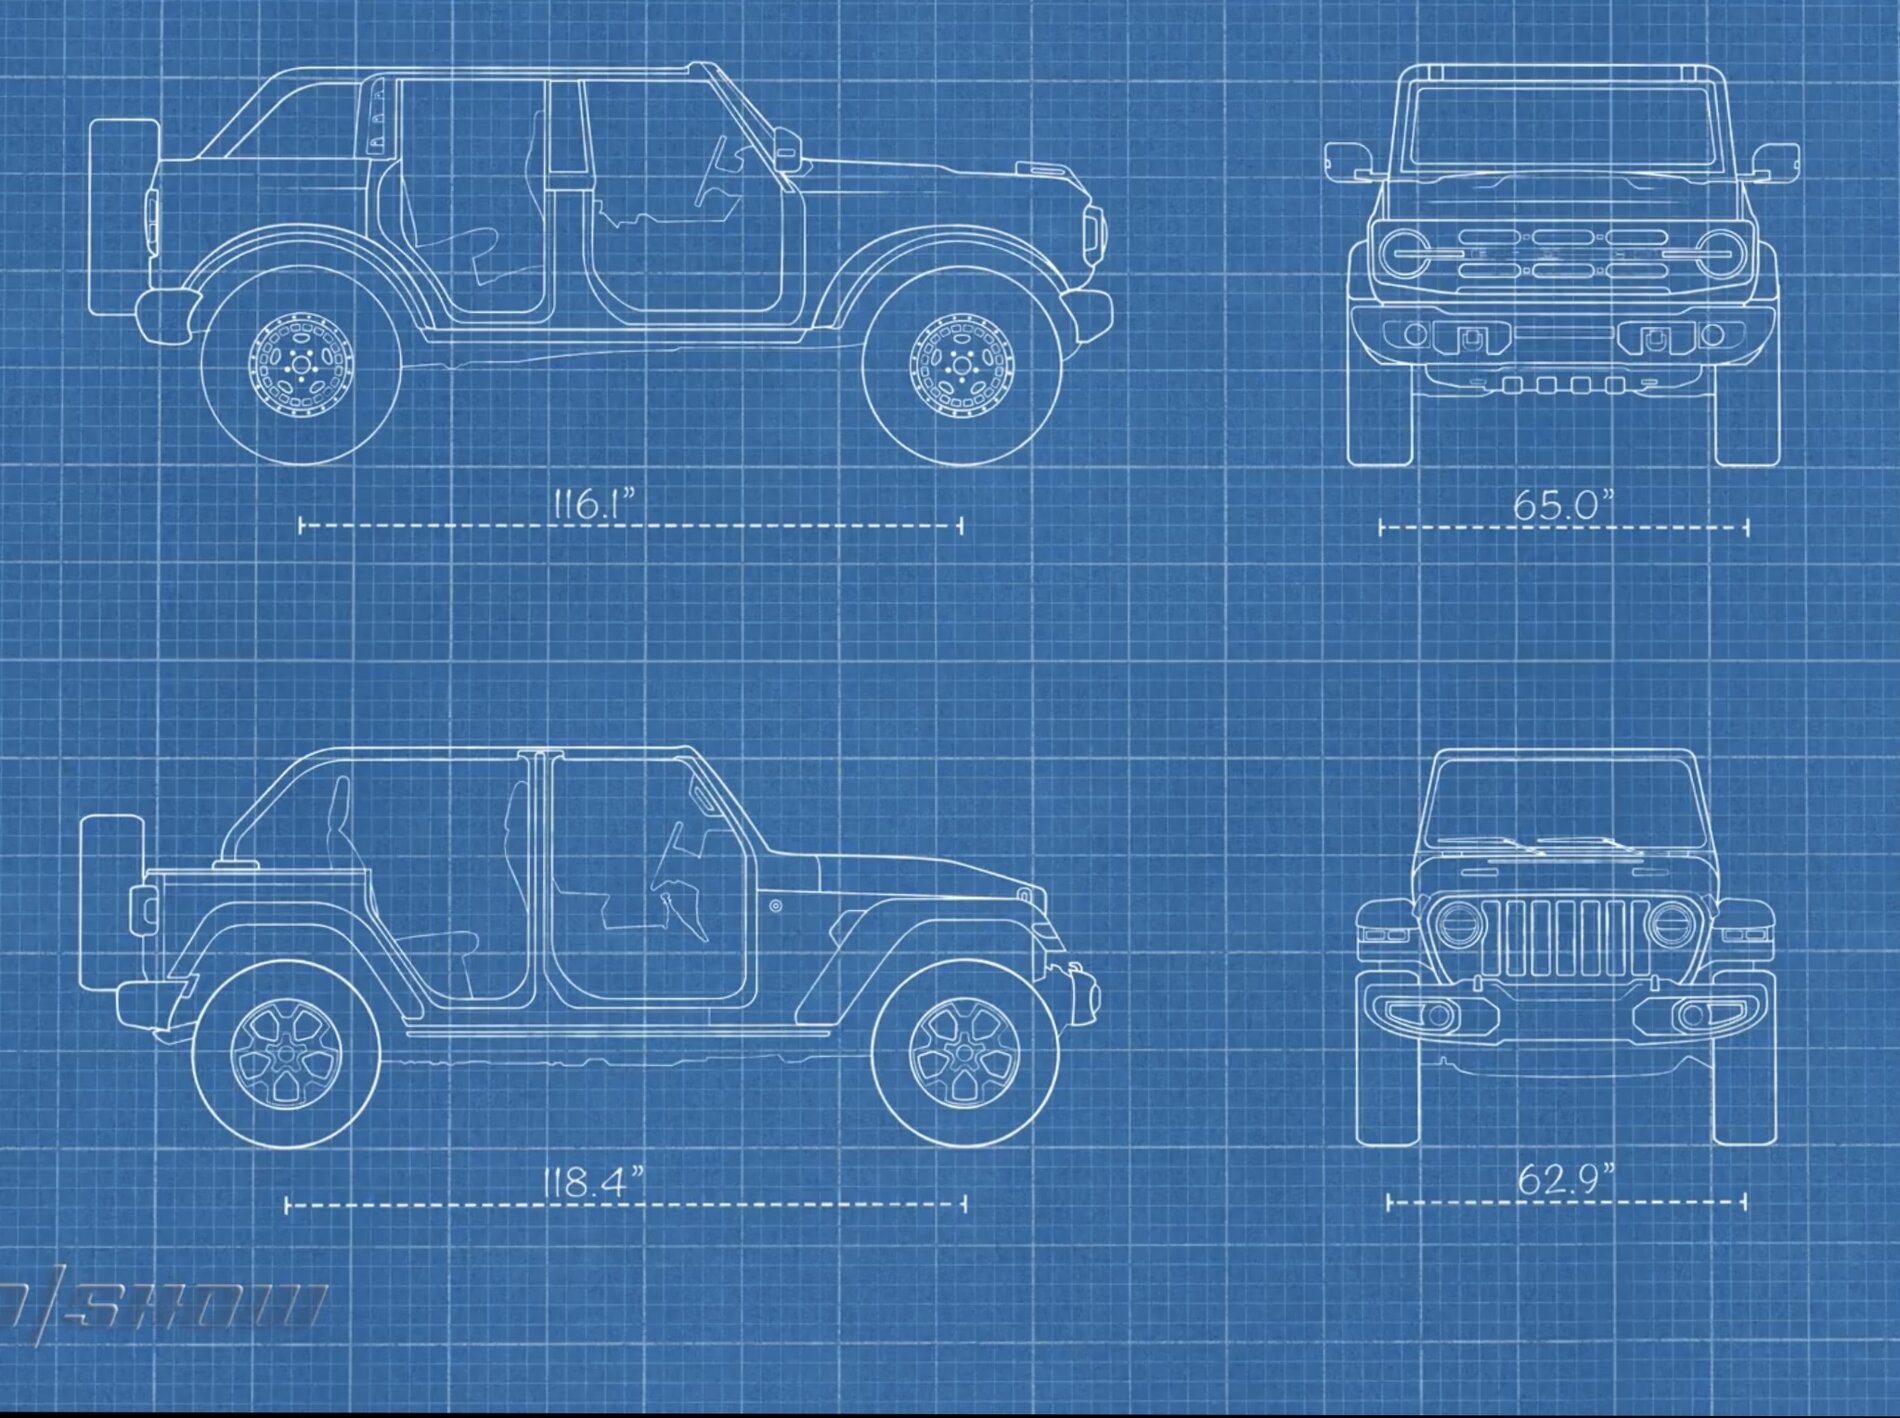 Ford Bronco Any pics of 2021 Bronco size comparison vs other vehicles? 54F816A8-A216-4DA0-BBA9-C36488481384